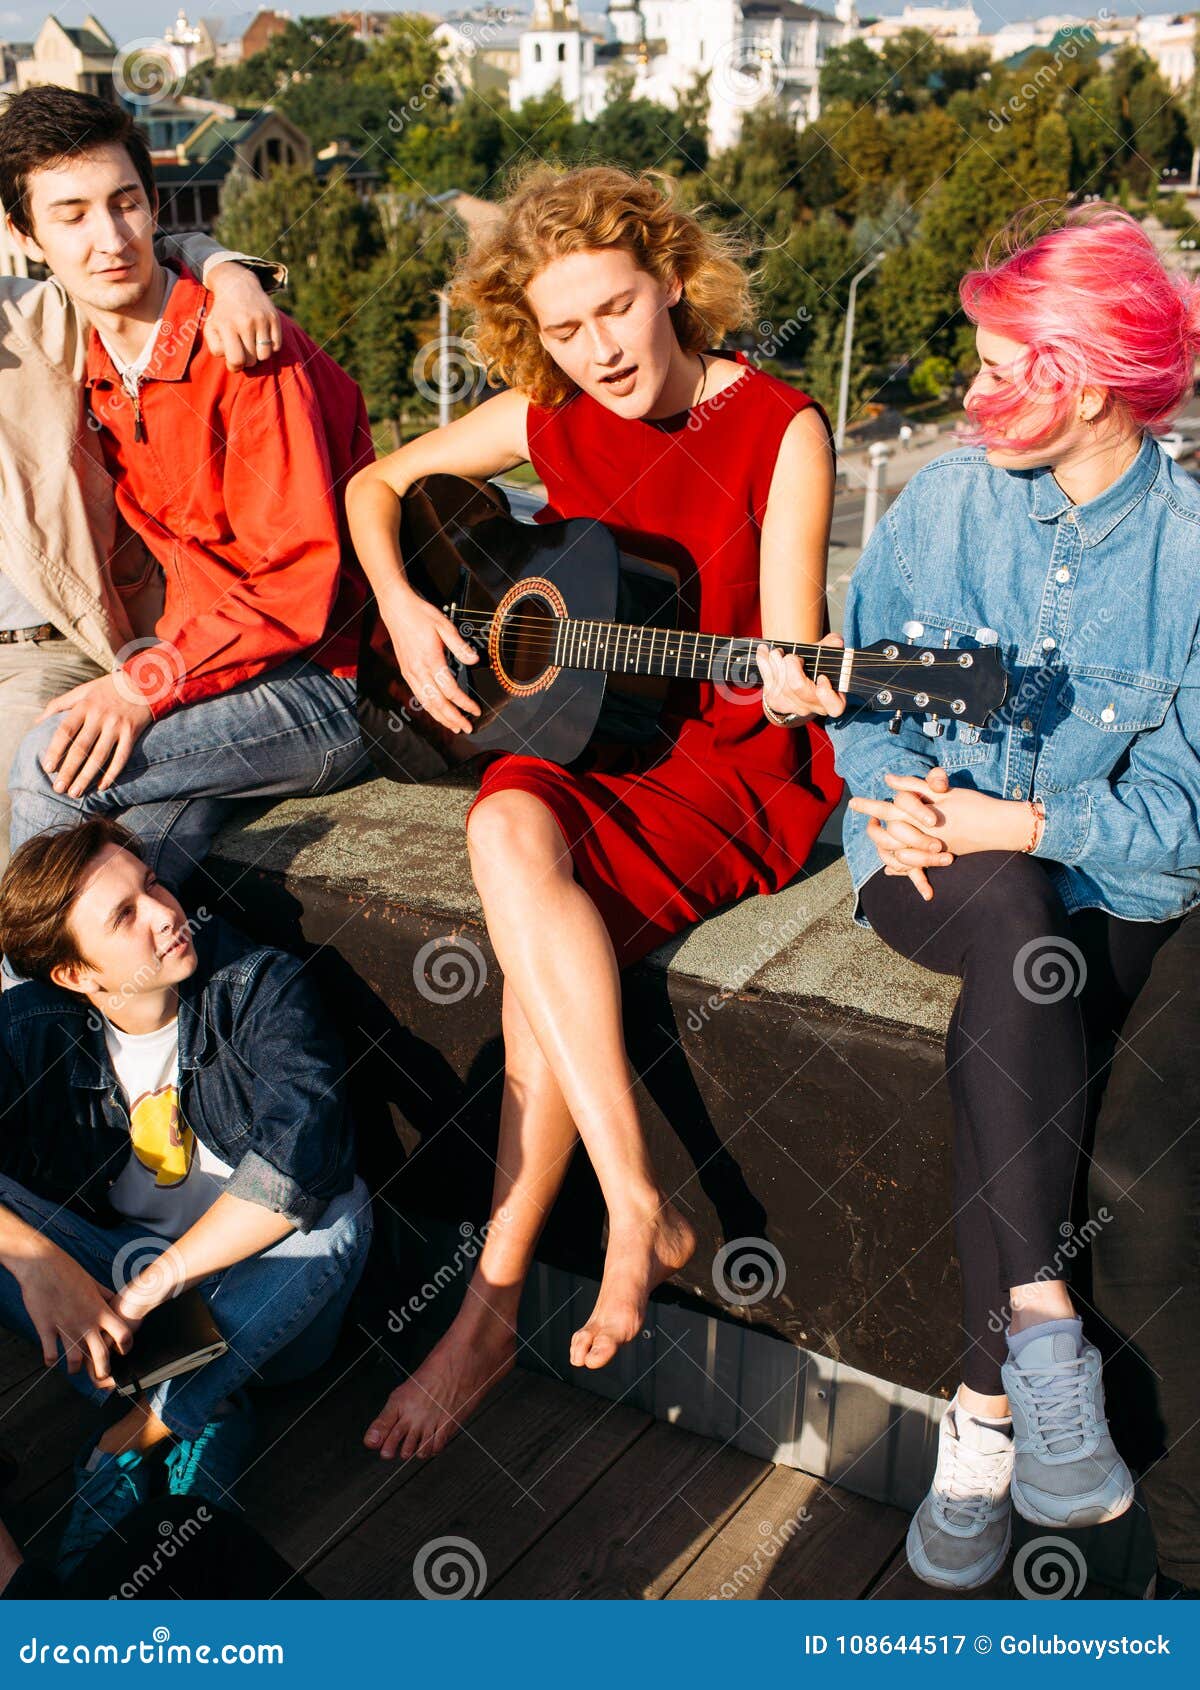 https://thumbs.dreamstime.com/z/girl-busker-sing-play-guitar-musician-art-leisure-barefoot-young-girl-busker-singing-playing-guitar-rooftop-artistic-108644517.jpg